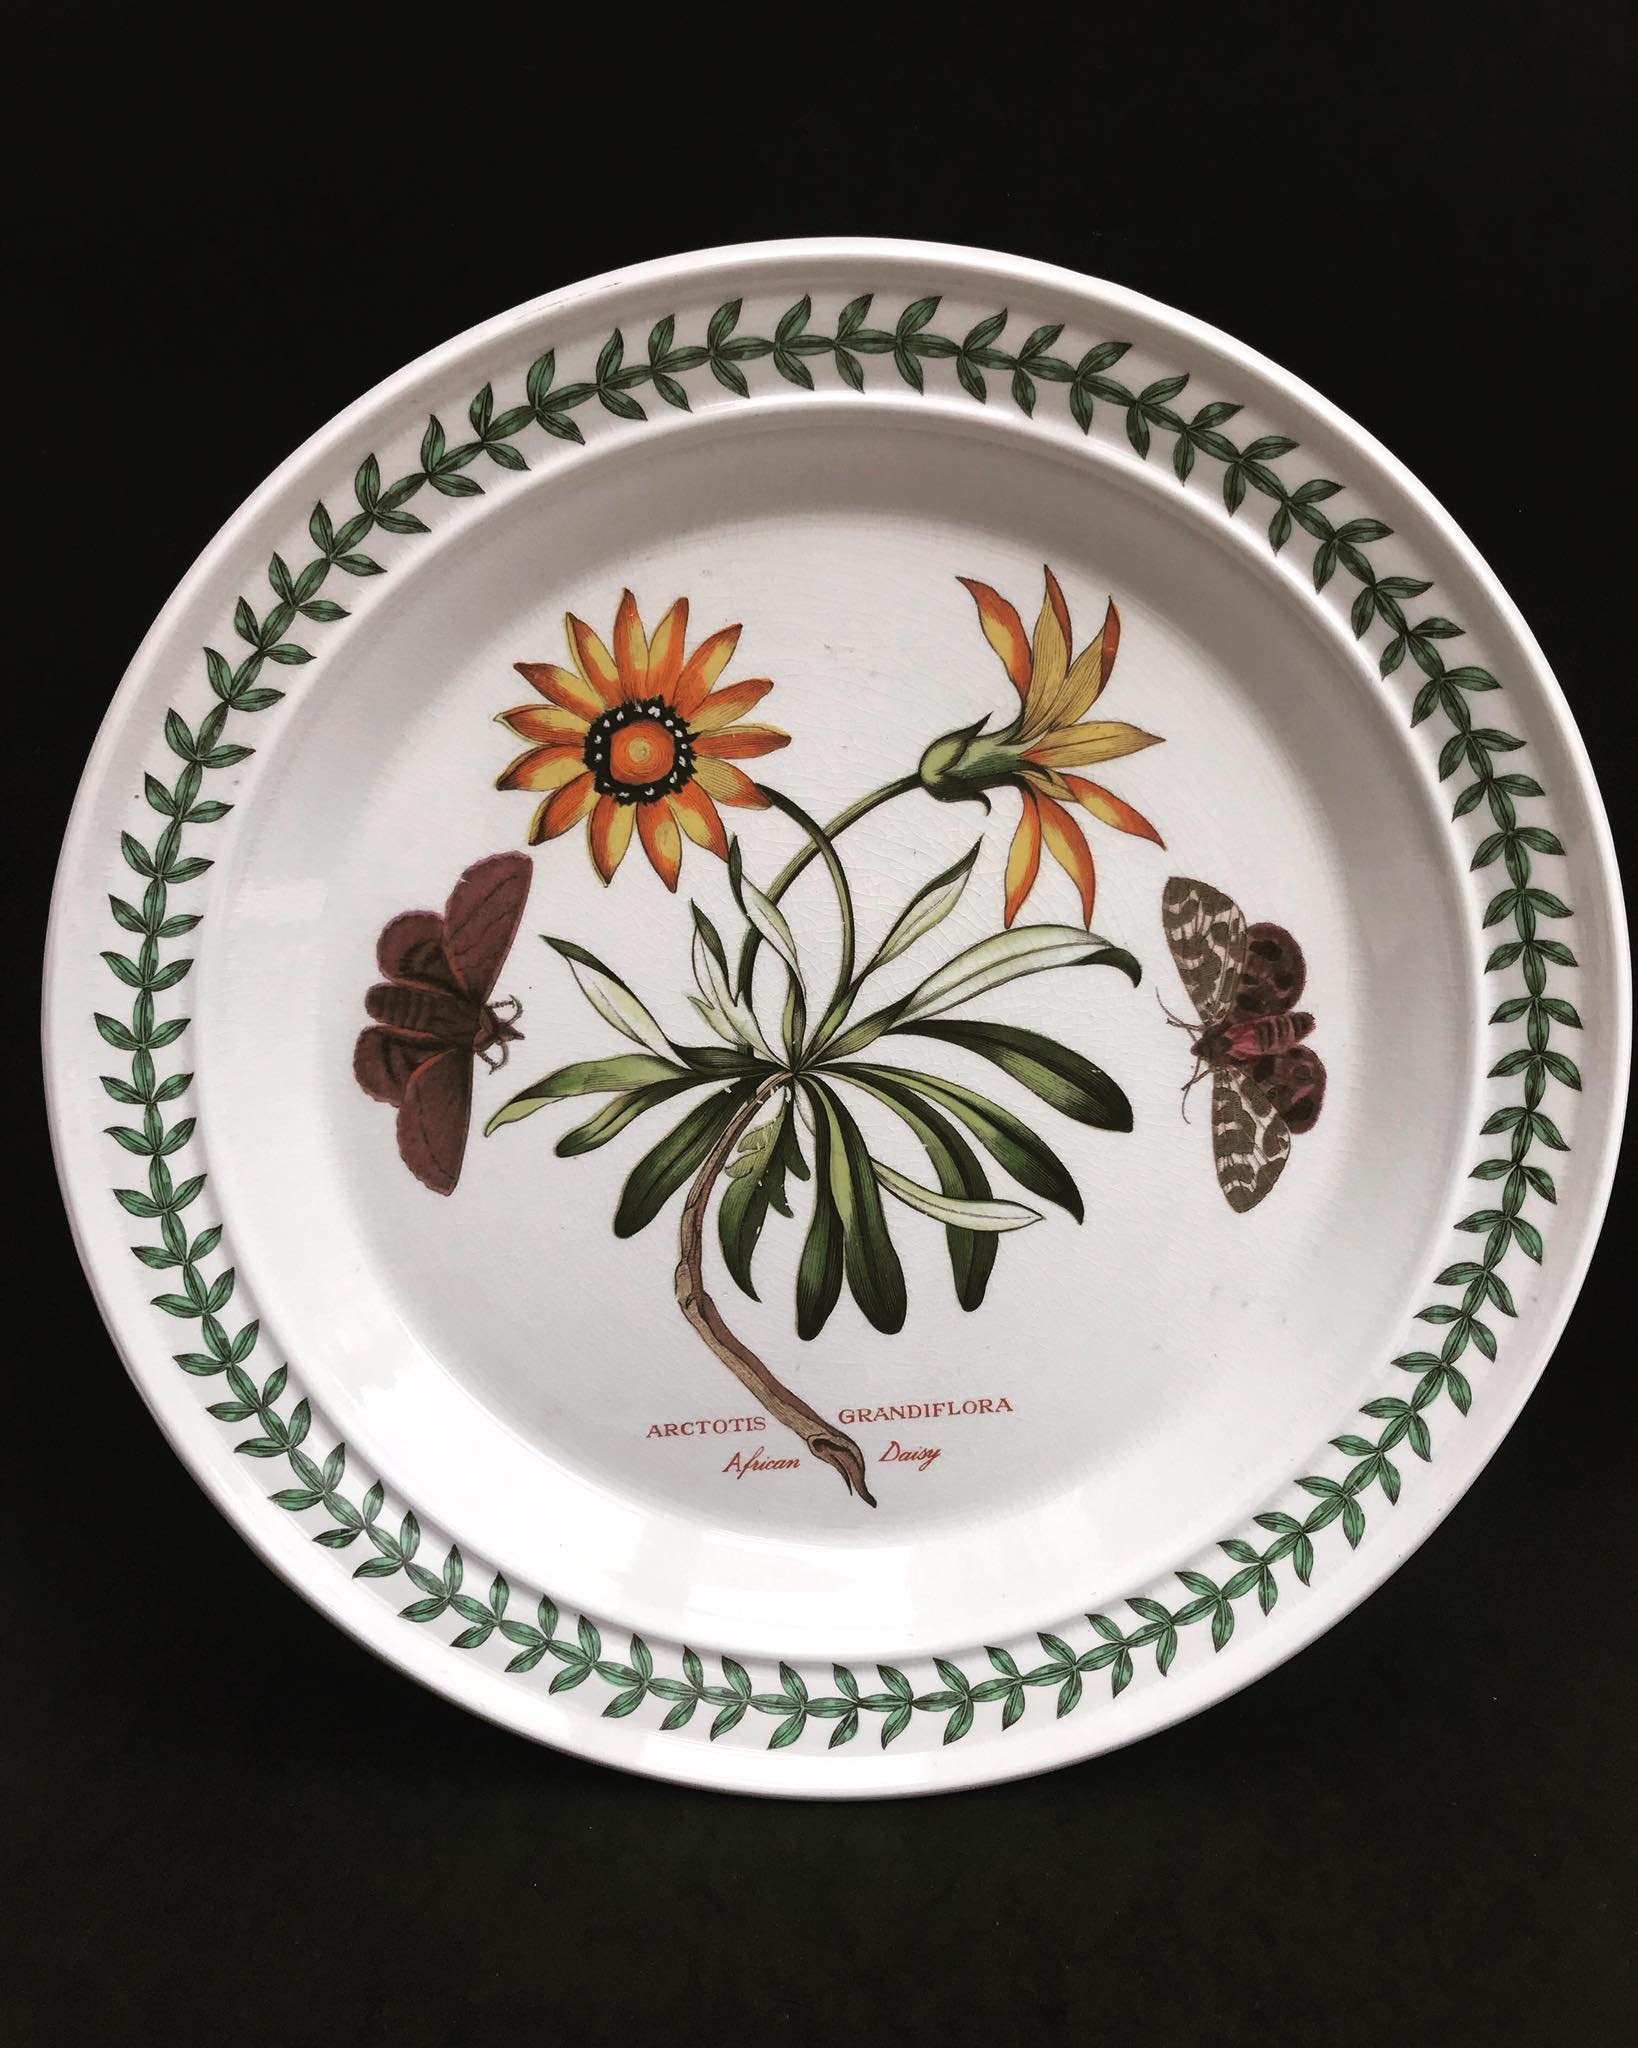 Vintage English Portmerion Botanical Gardens Dinner Plates - Set of 12